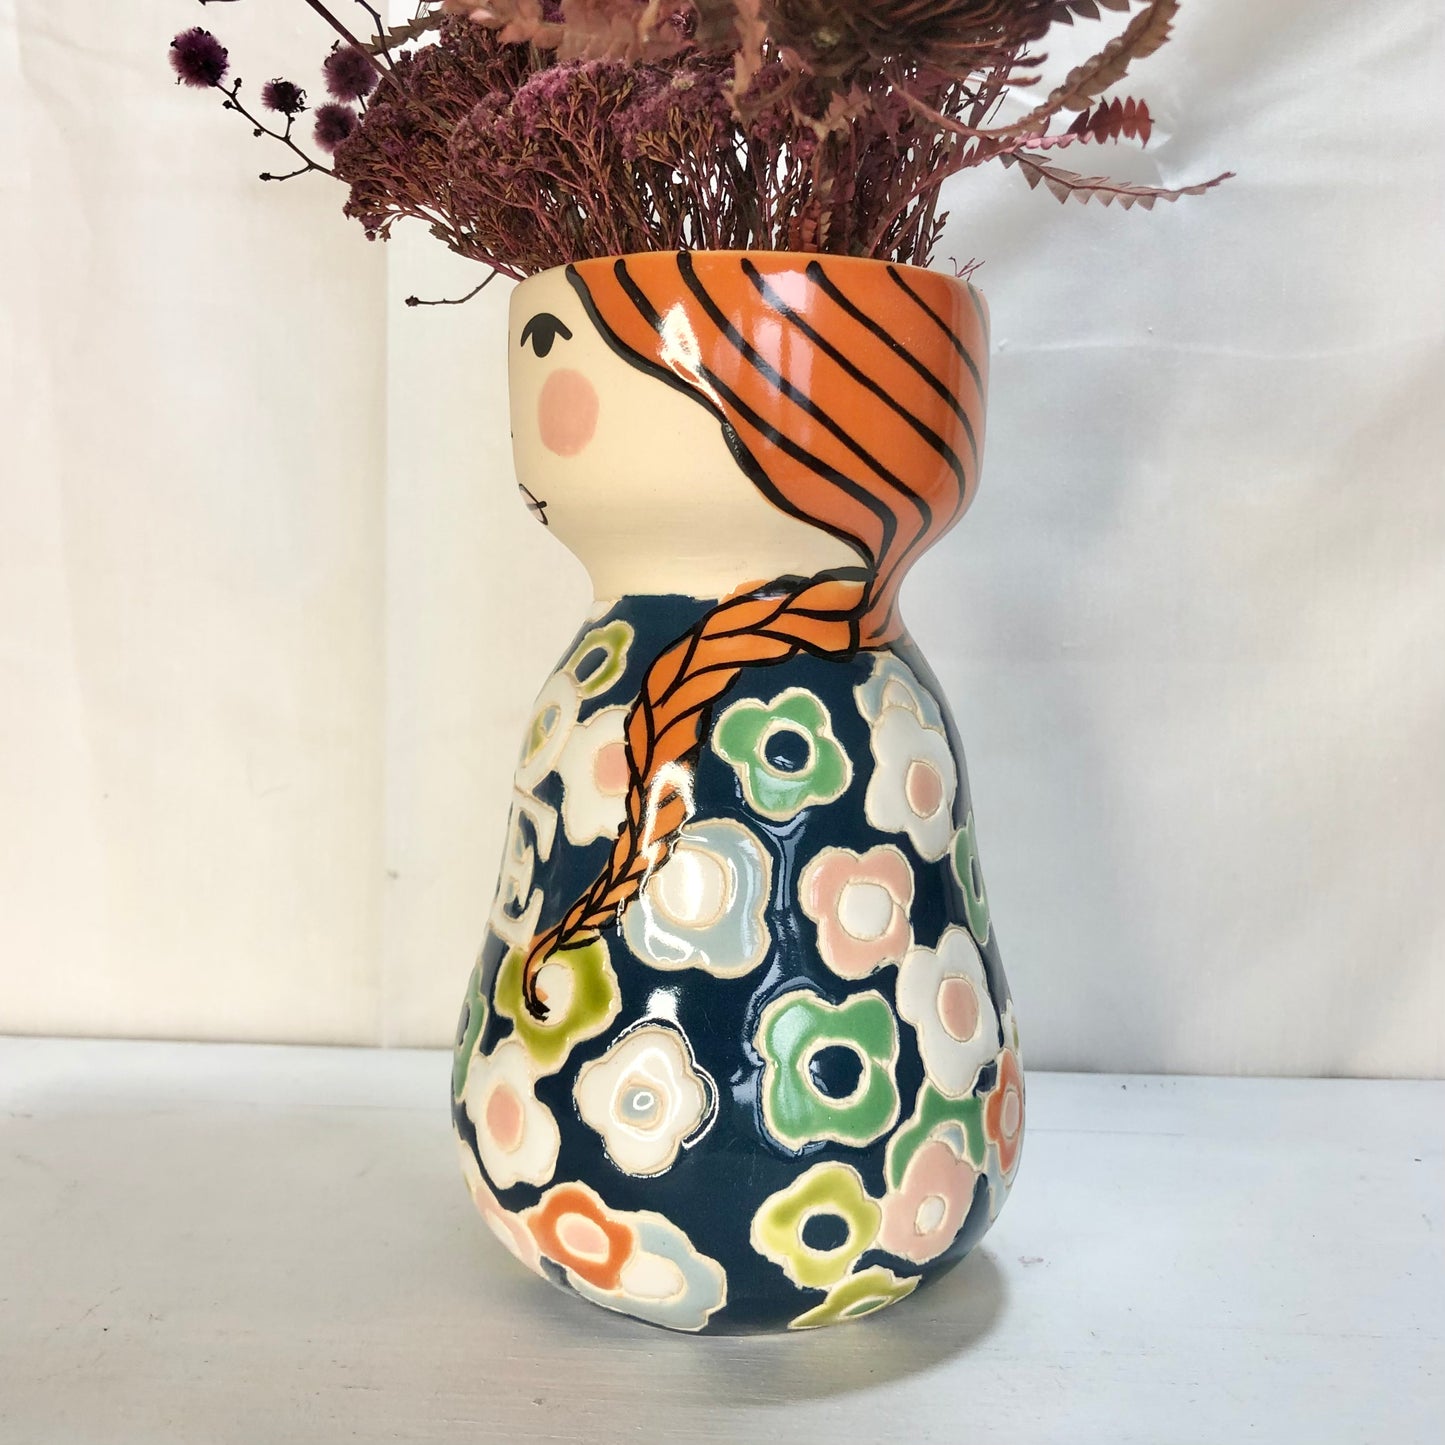 LOVE lady hand painted face vase planter pot